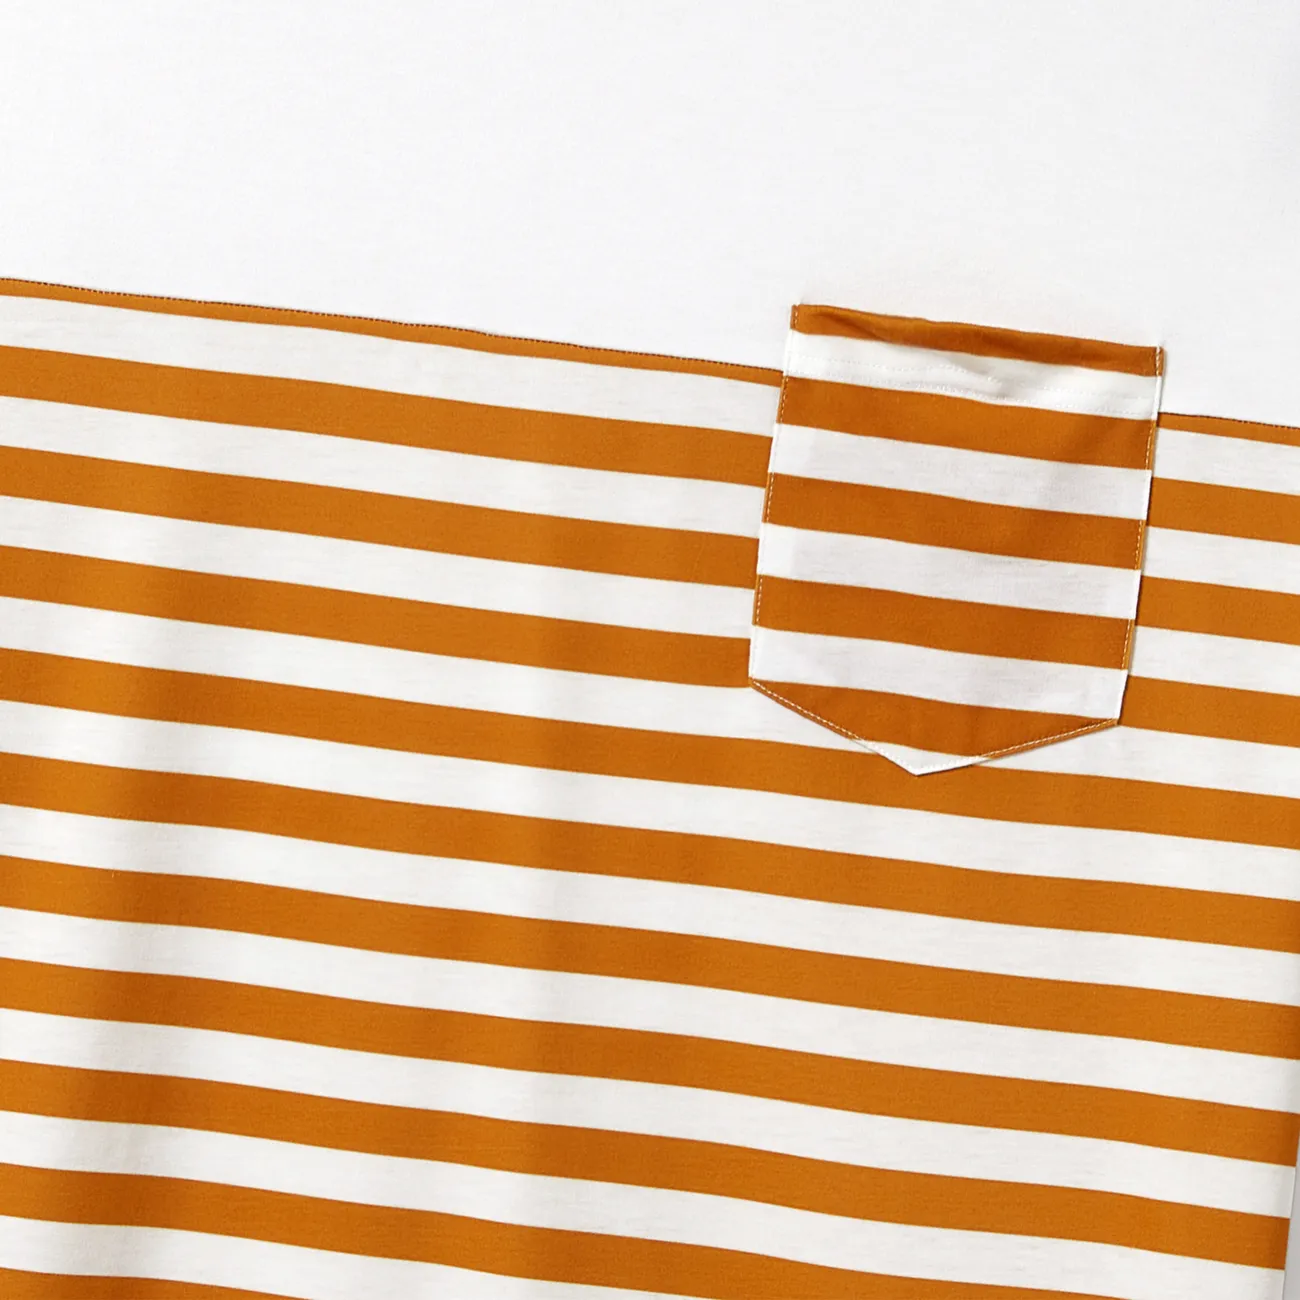 Family Matching Stripe T-shirt and White Top with Orange Polka Dot Wrap Bottom Ruffled Hem Skirt Set Color block big image 1